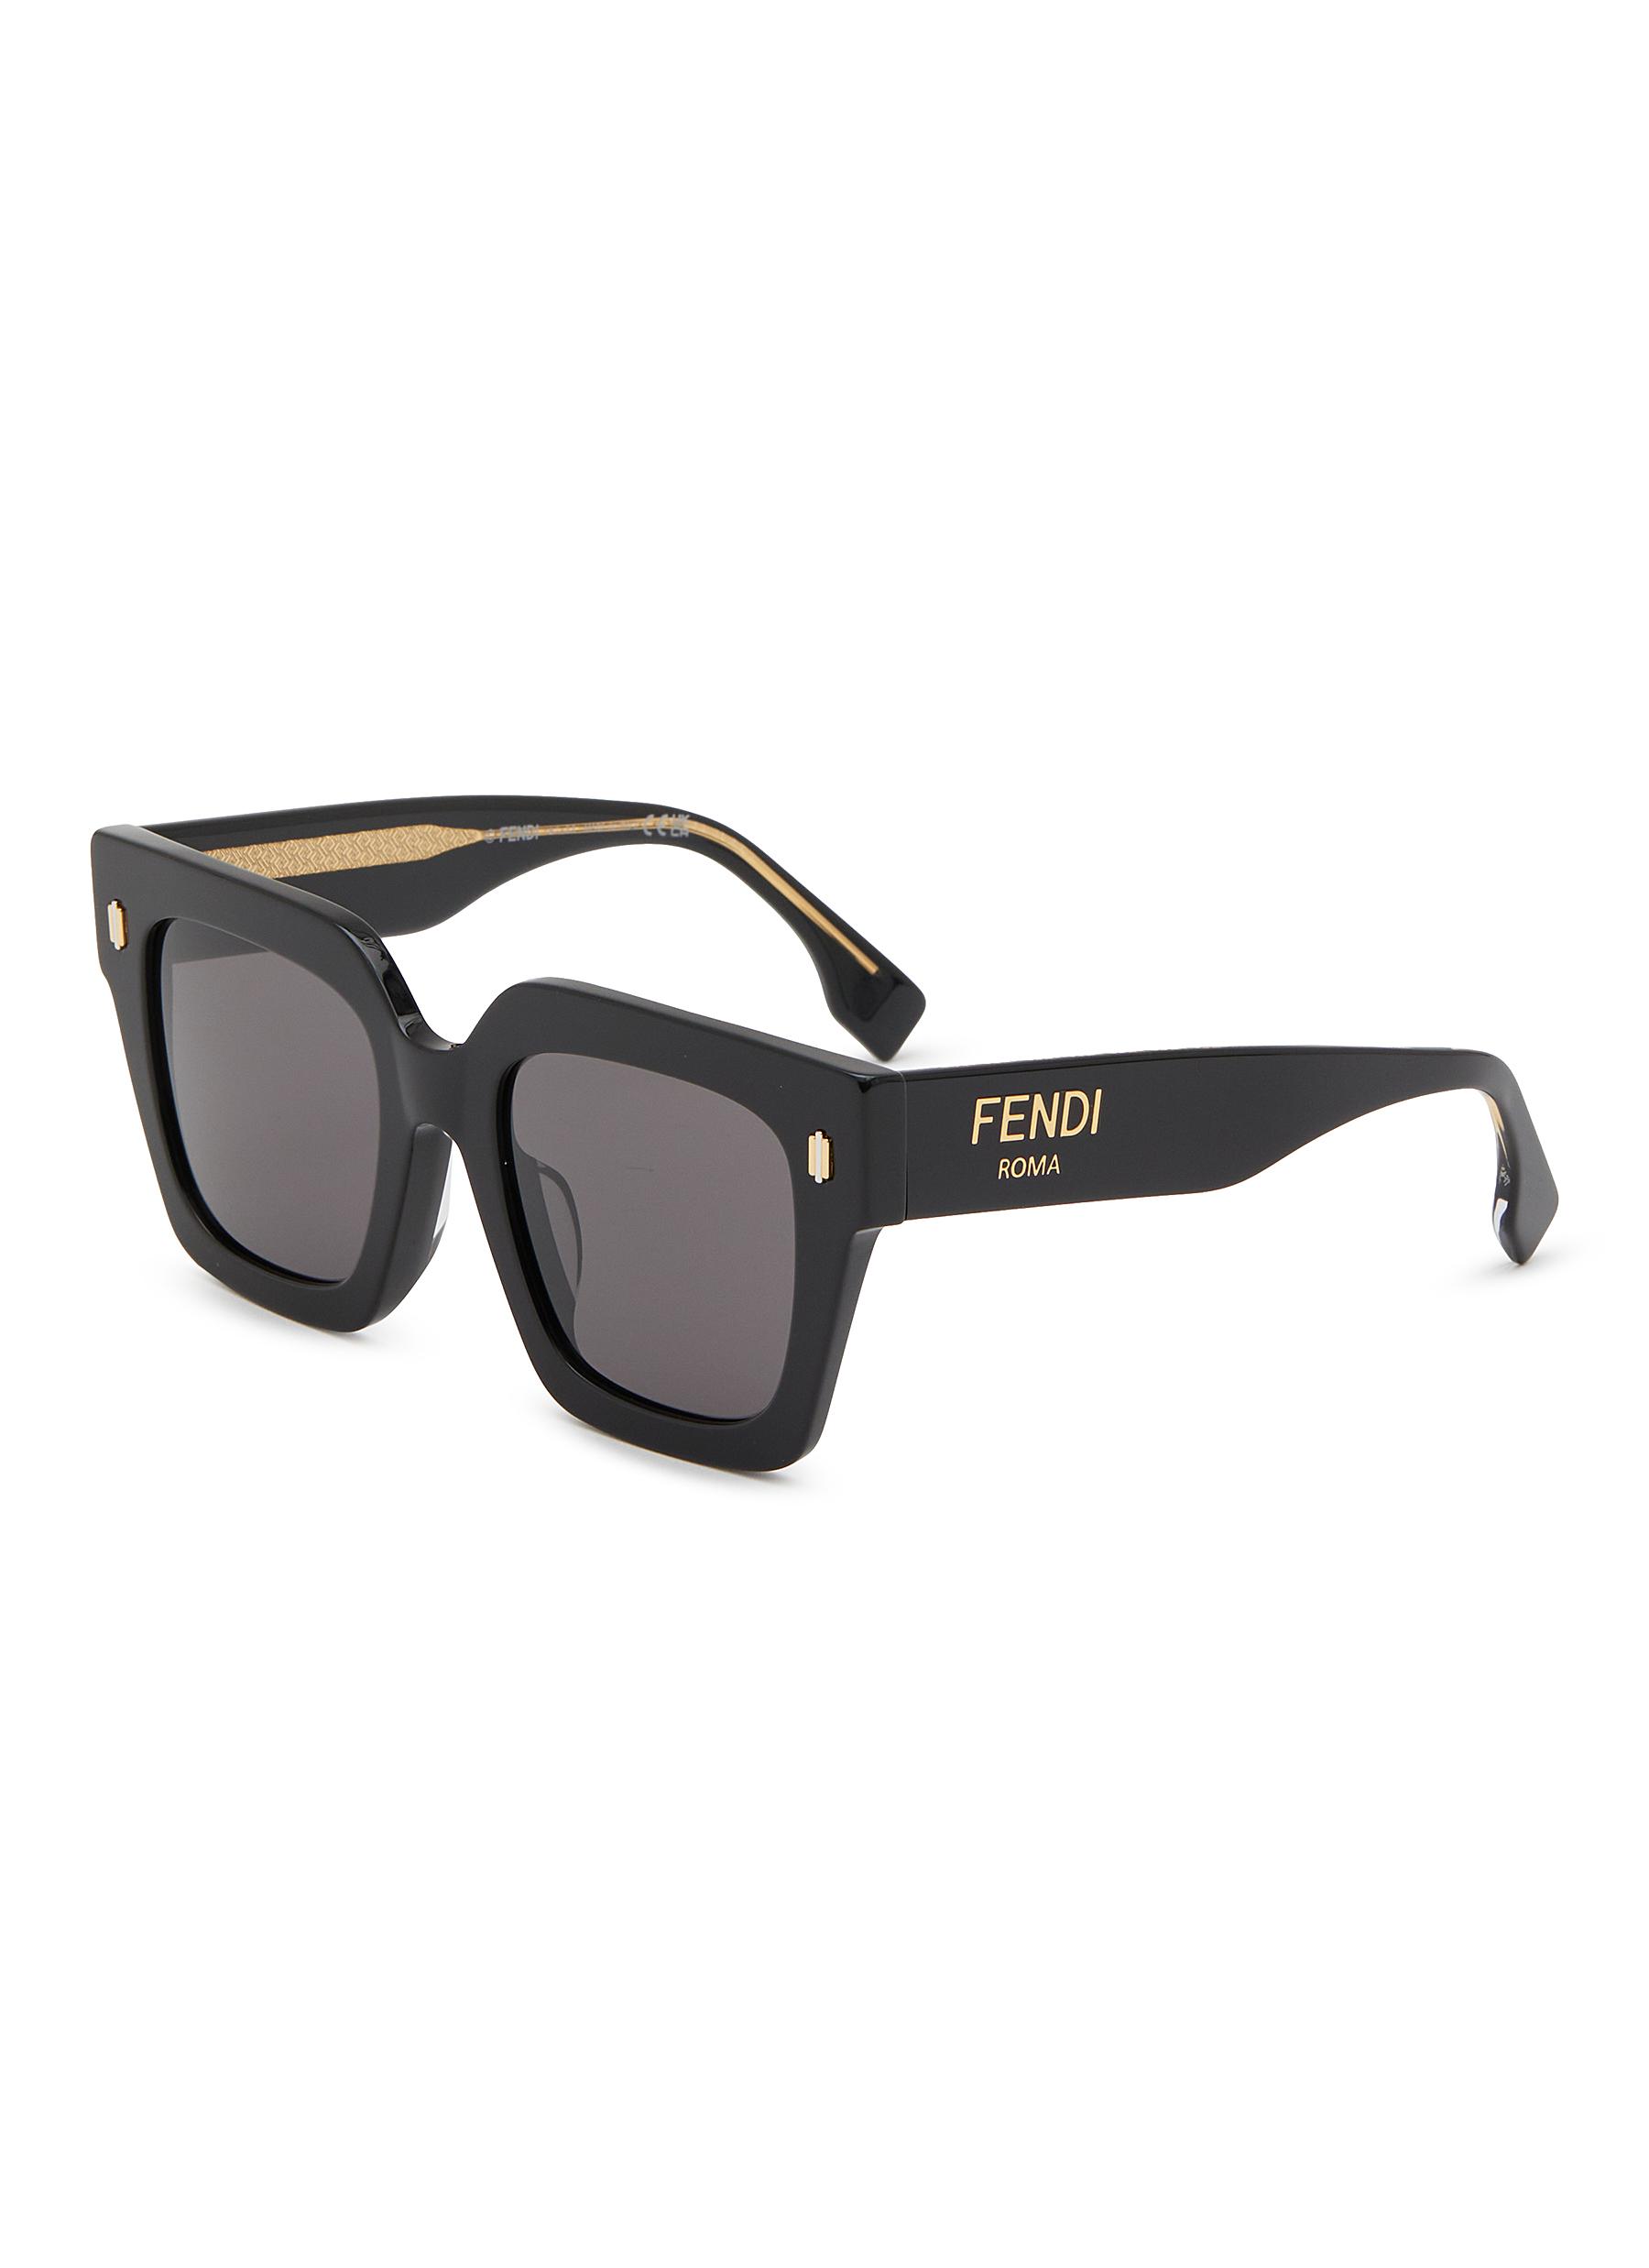 FENDI | Fendi Roma Acetate Square Frame Sunglasses | Women | Lane Crawford